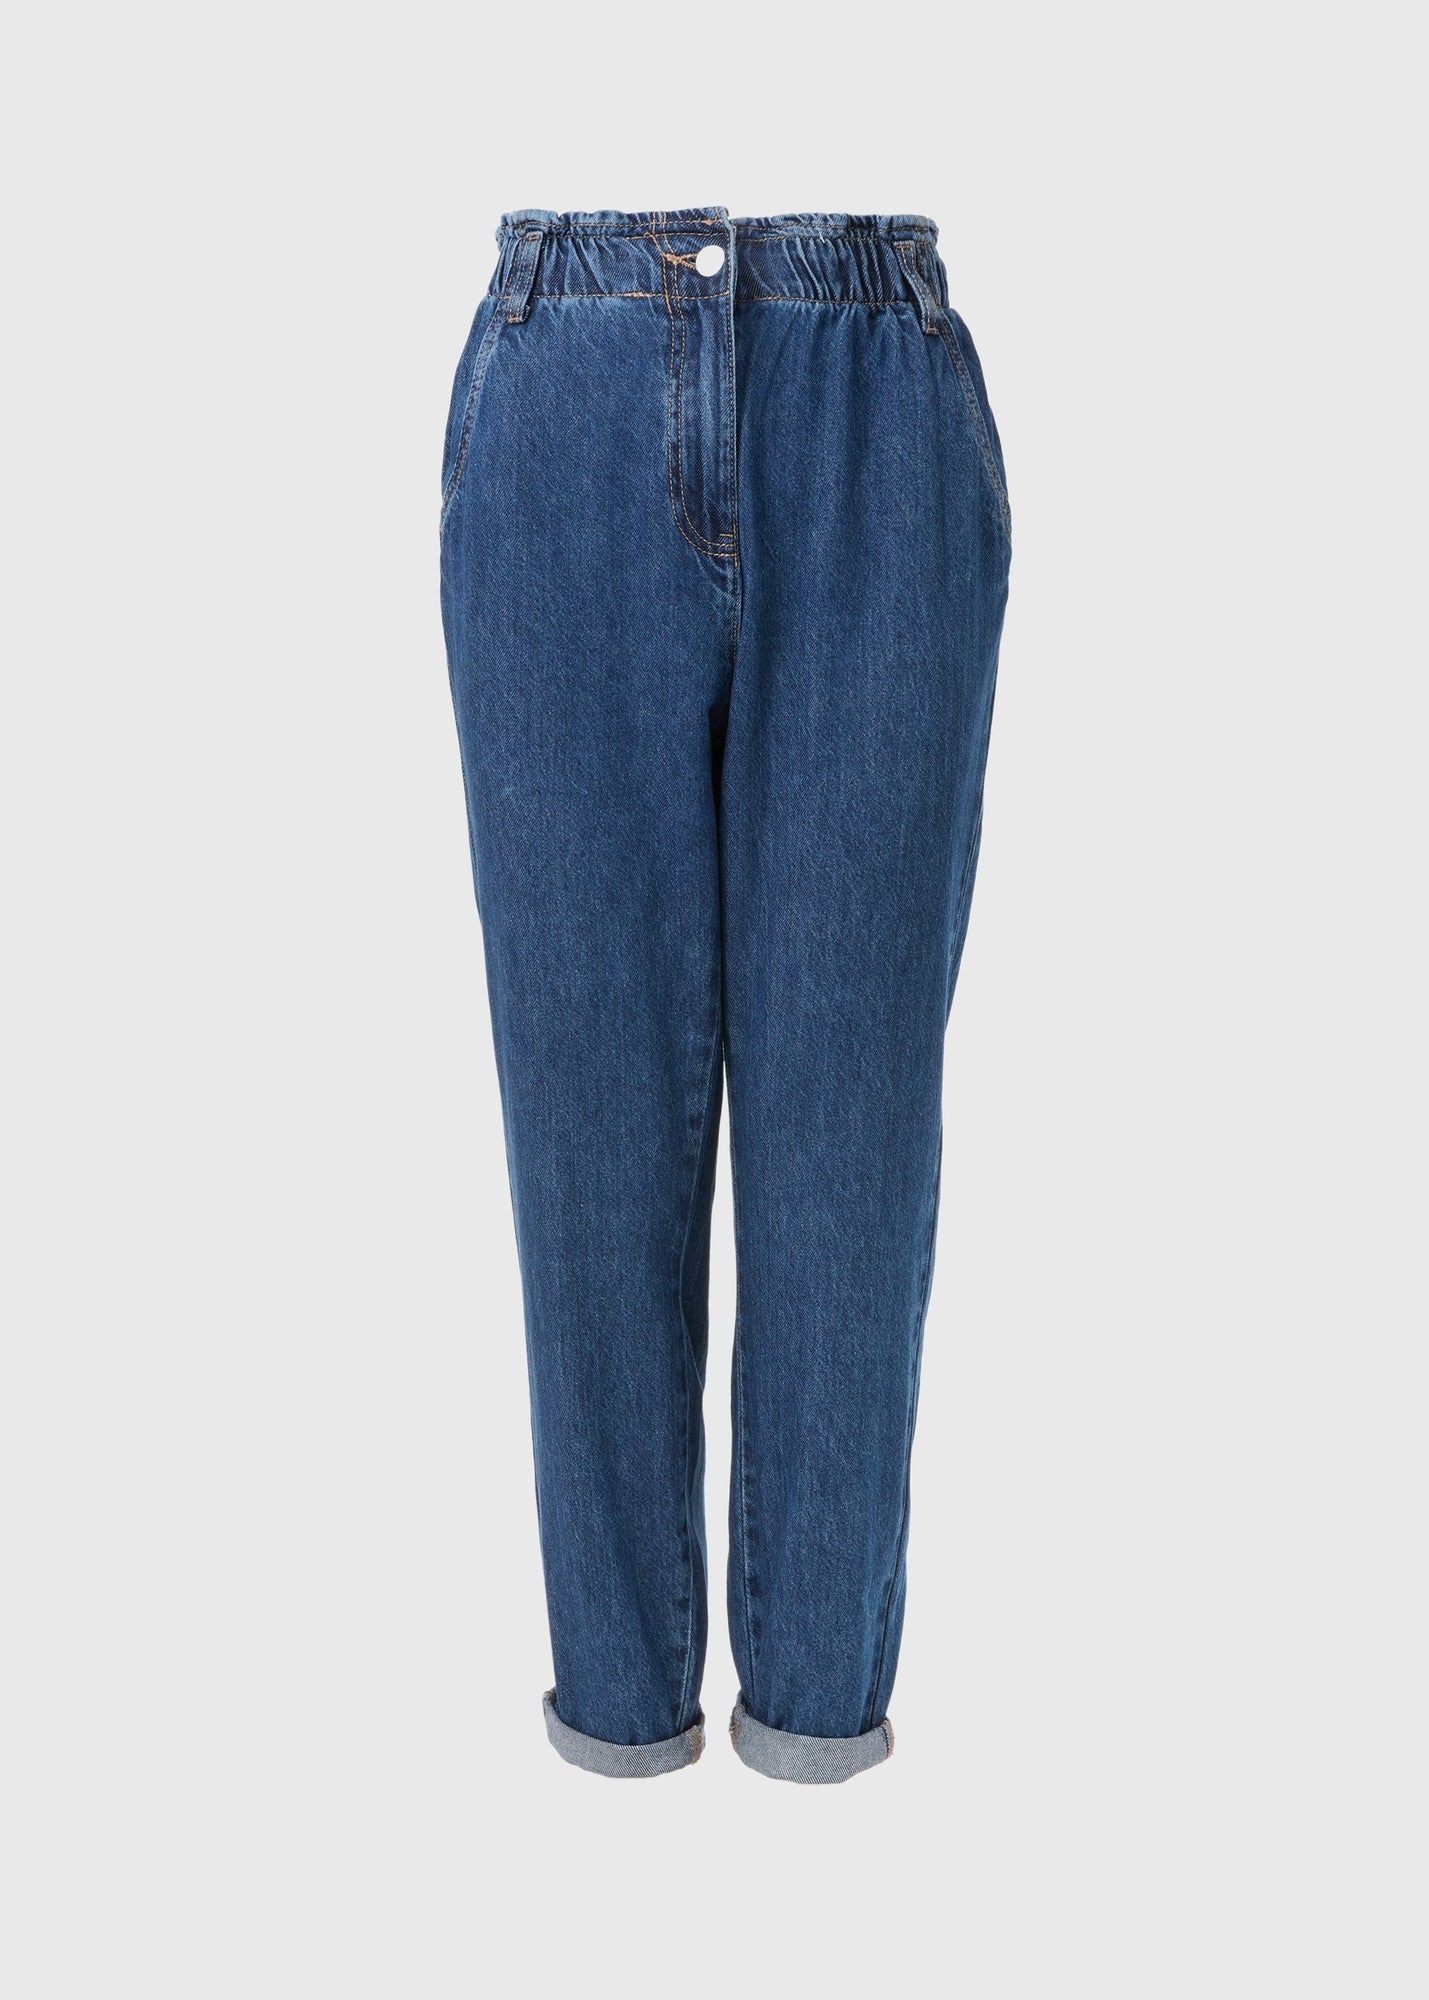 Women's Skinny Jeans  Blue & Black Skinny Jeans - Matalan